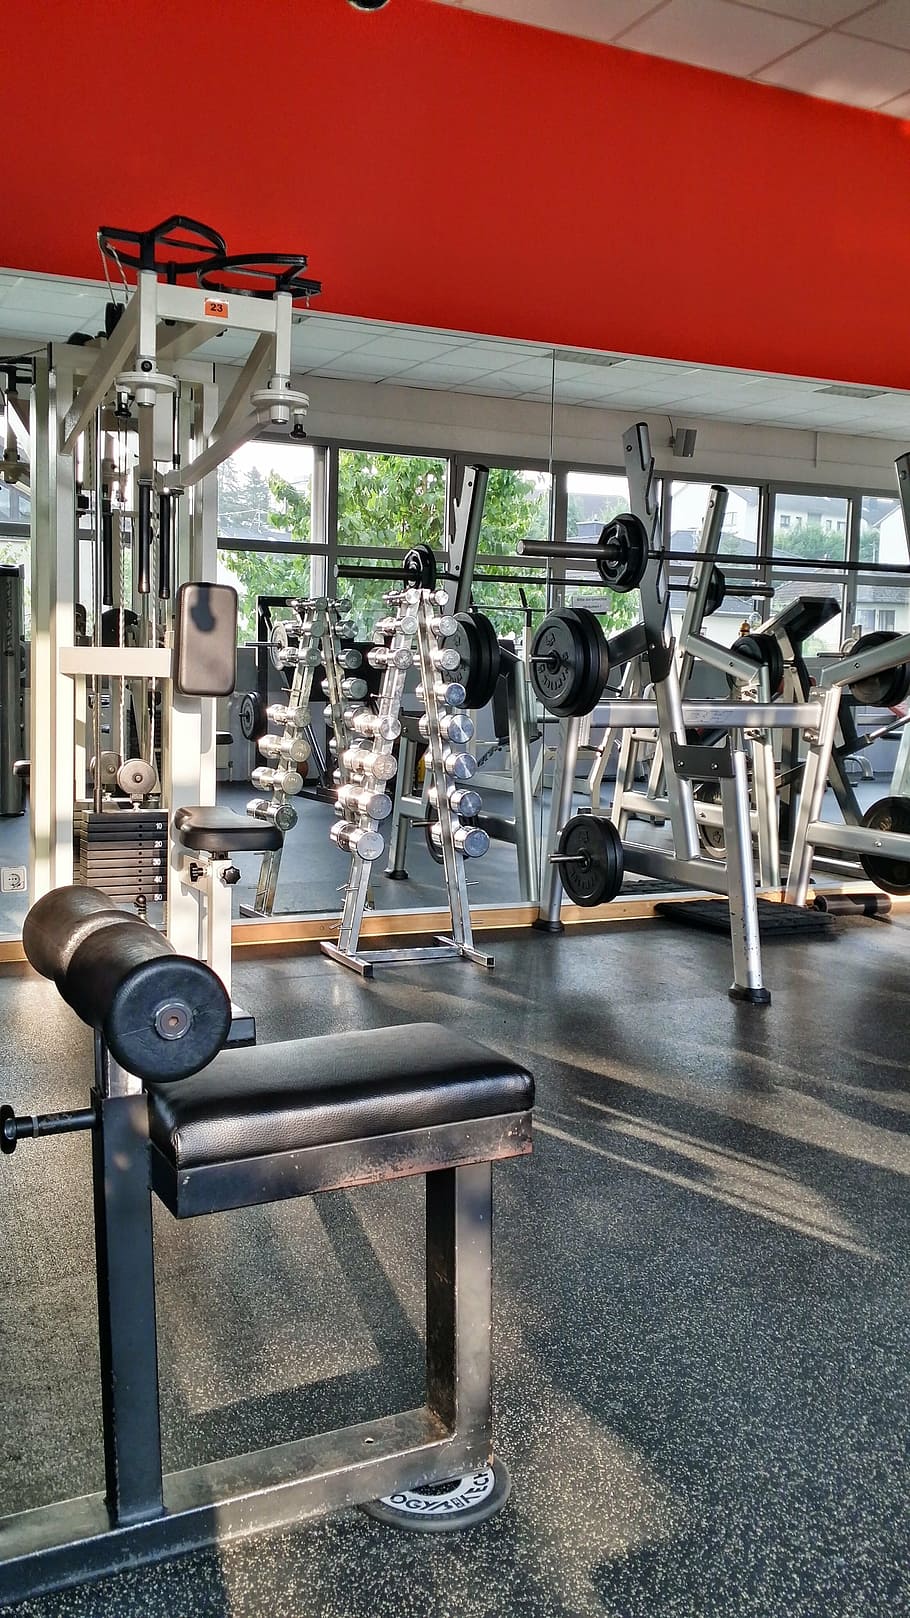 gym equipment inside room, training, sport, fit, sporty, fitness